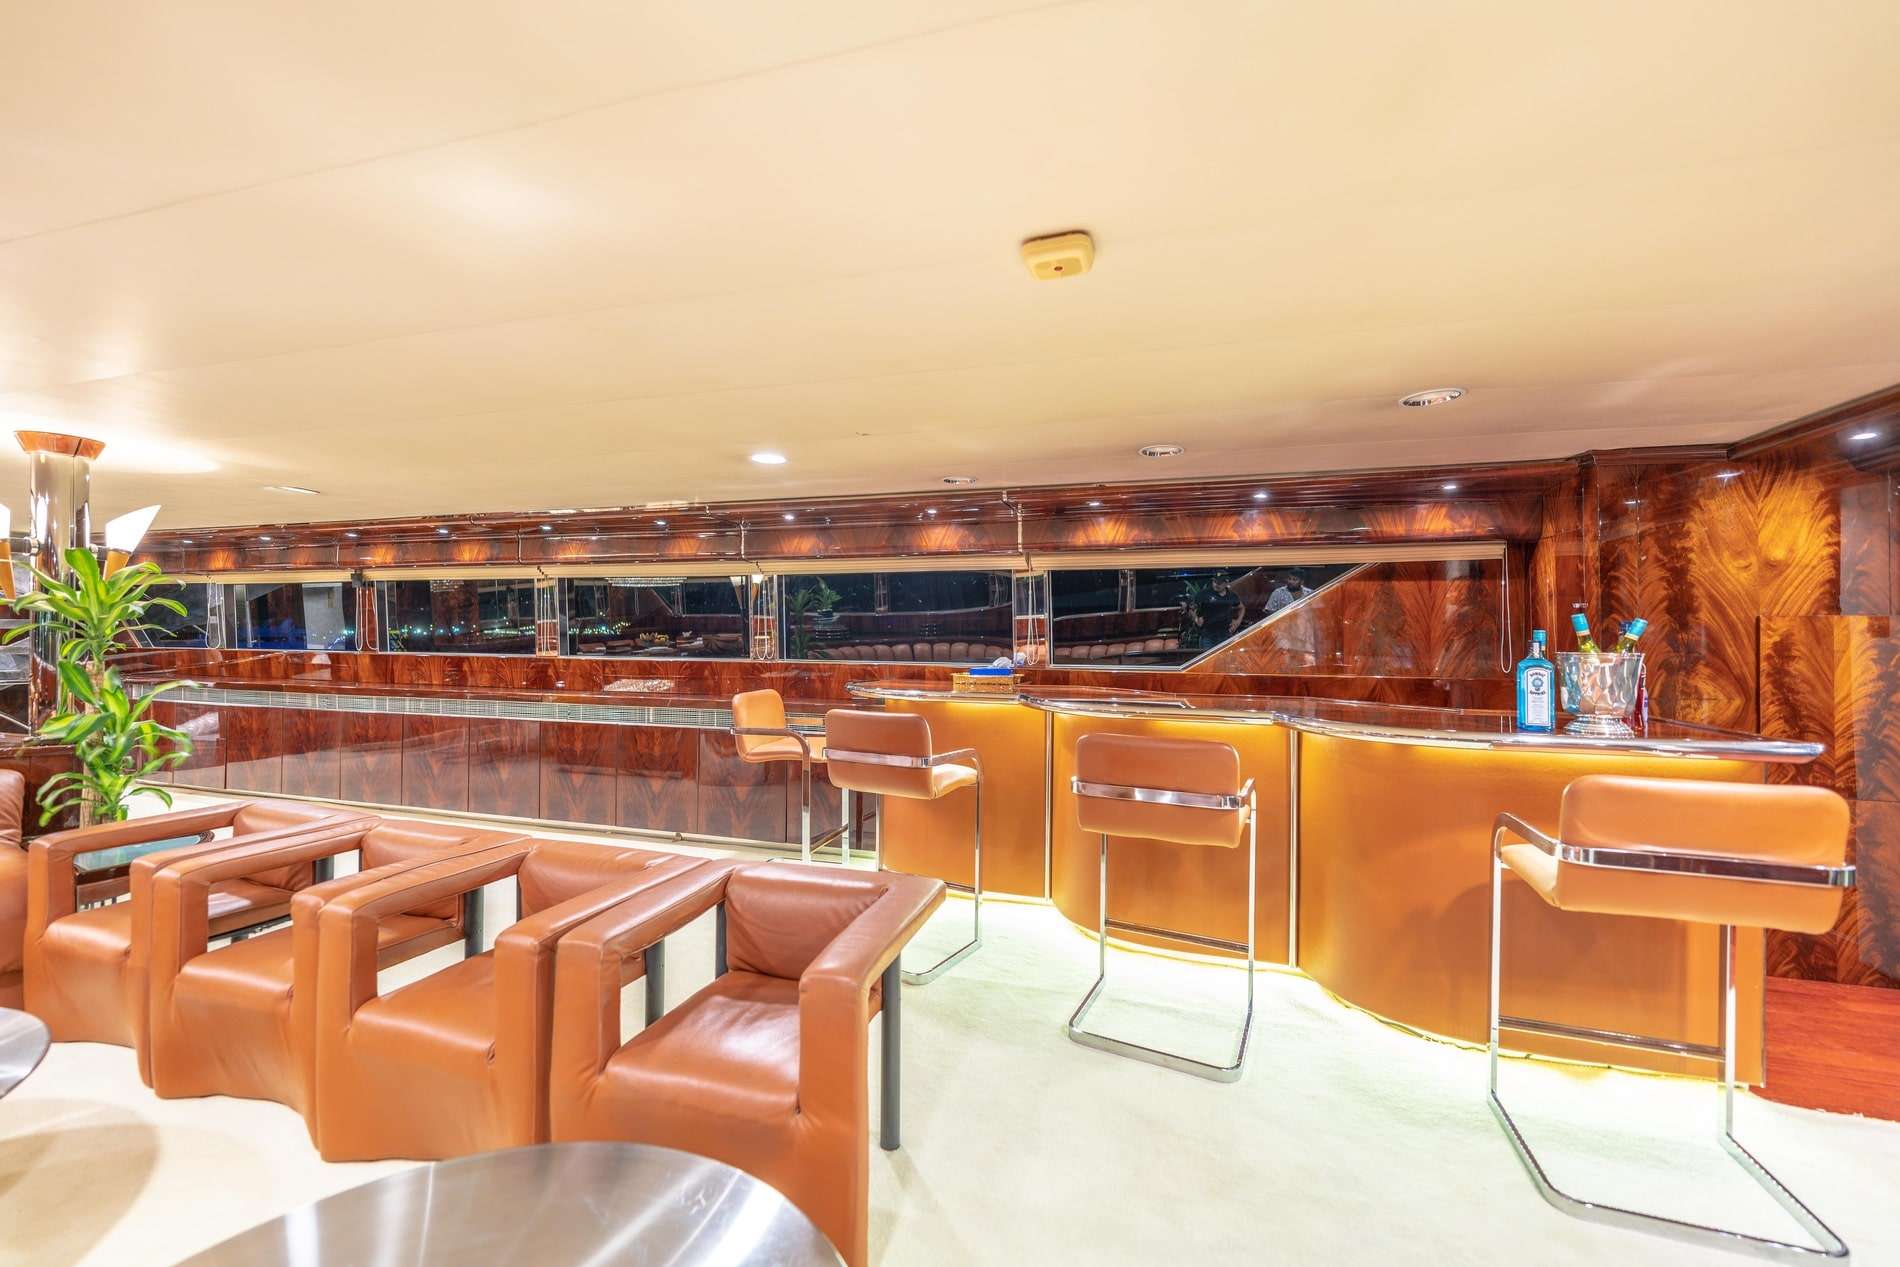 142 - Superyacht charter worldwide & Boat hire in United Arab Emirates Dubai Dubai Marina Yacht Club 2